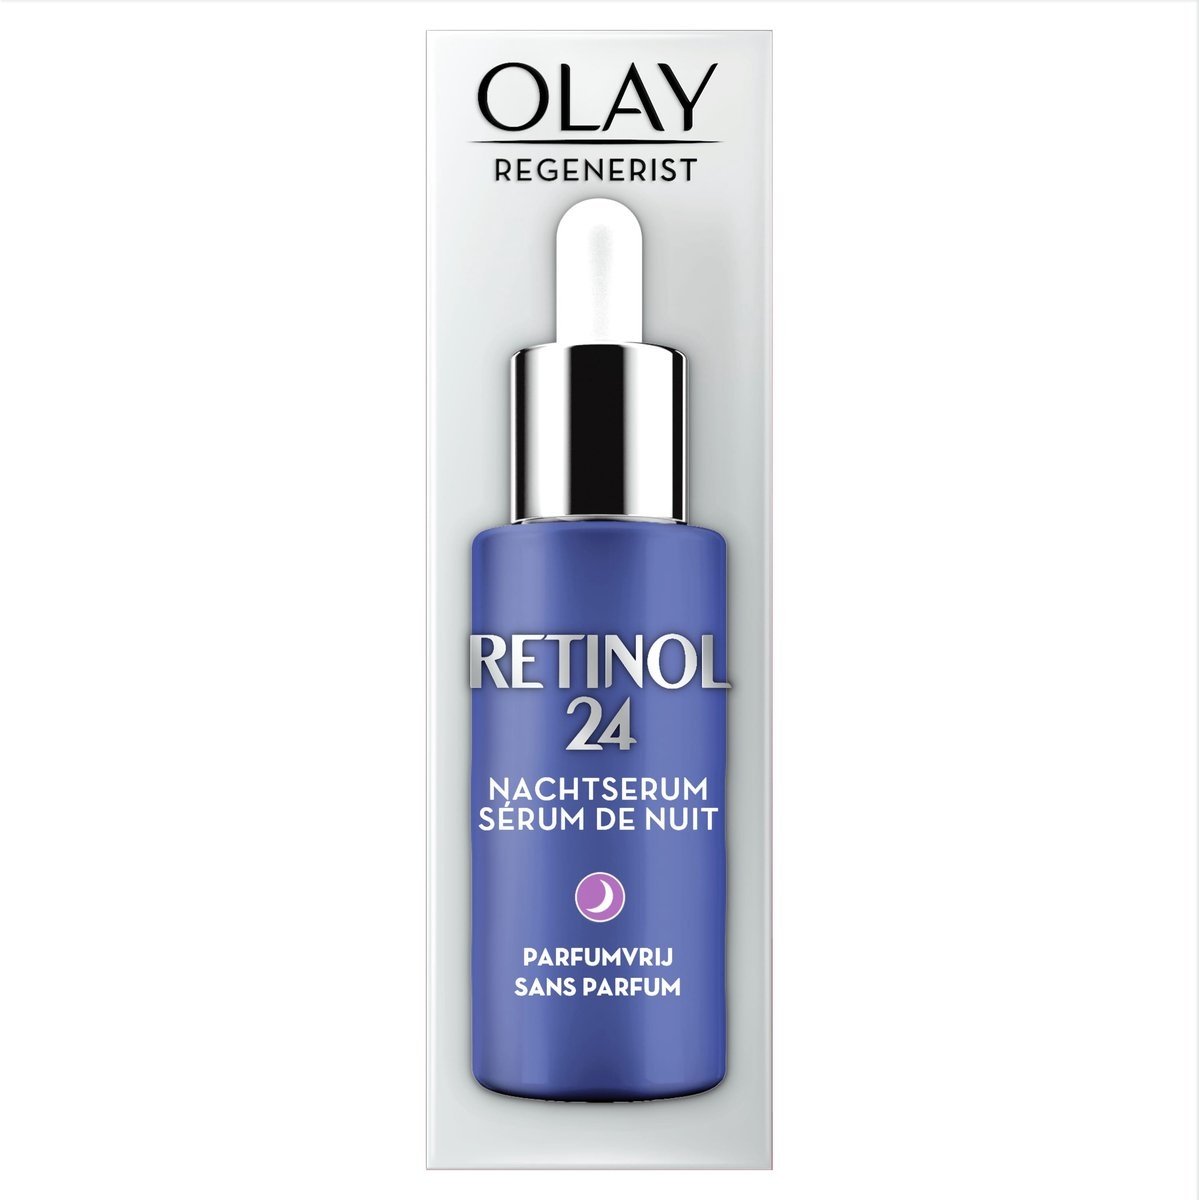 Olay Retinol24 - Night Serum - Fragrance Free With Retinol And Vitamin B3 - 40 ml - Packaging damaged